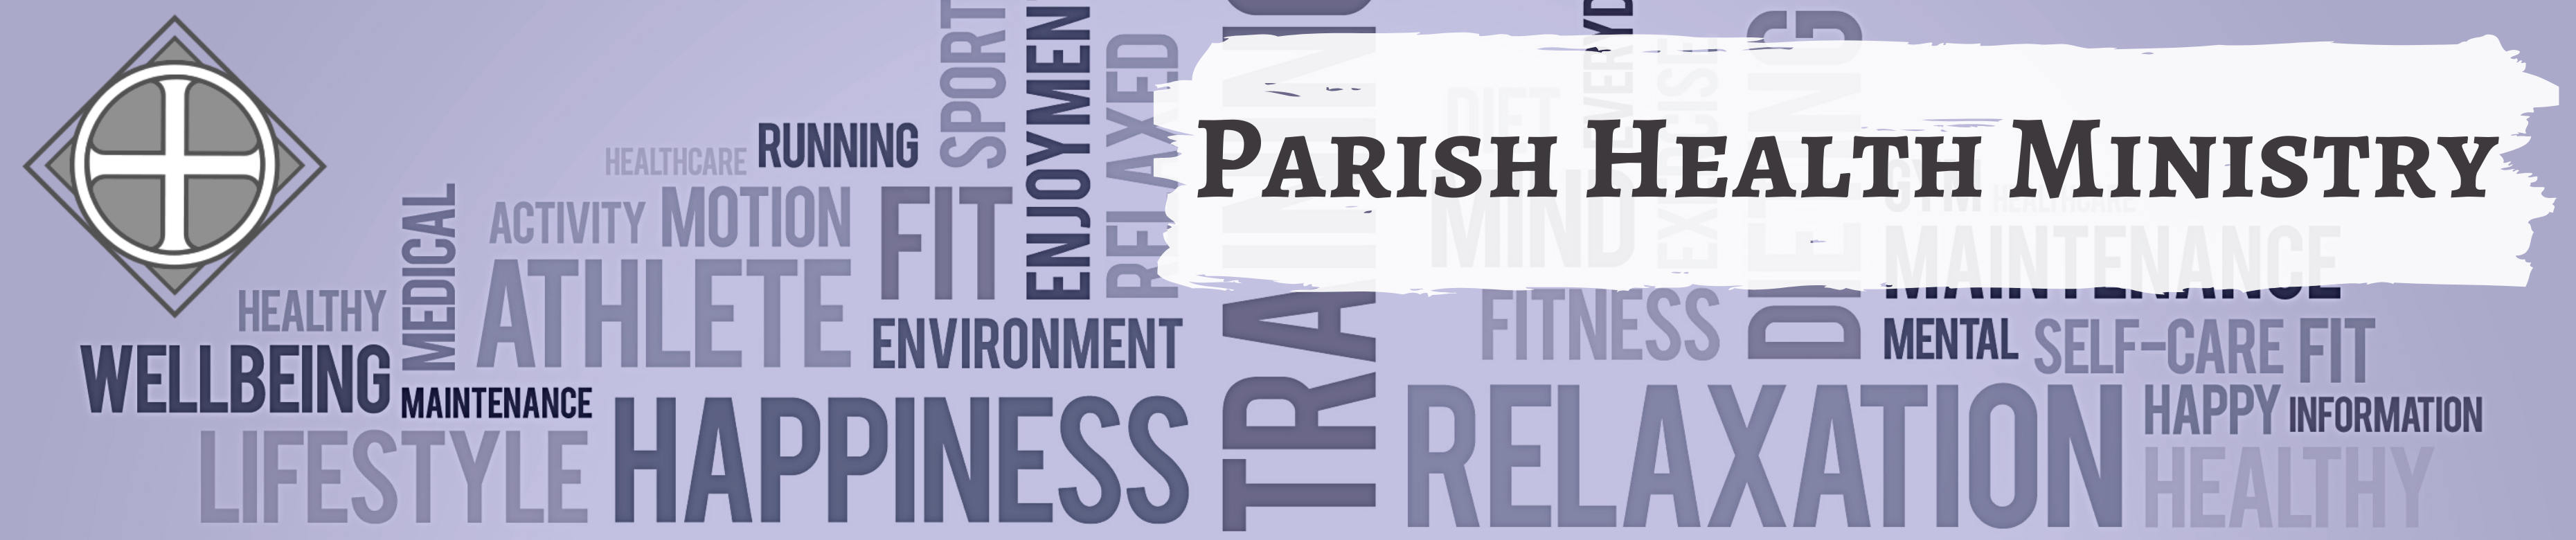 Parish Health Ministry Banner